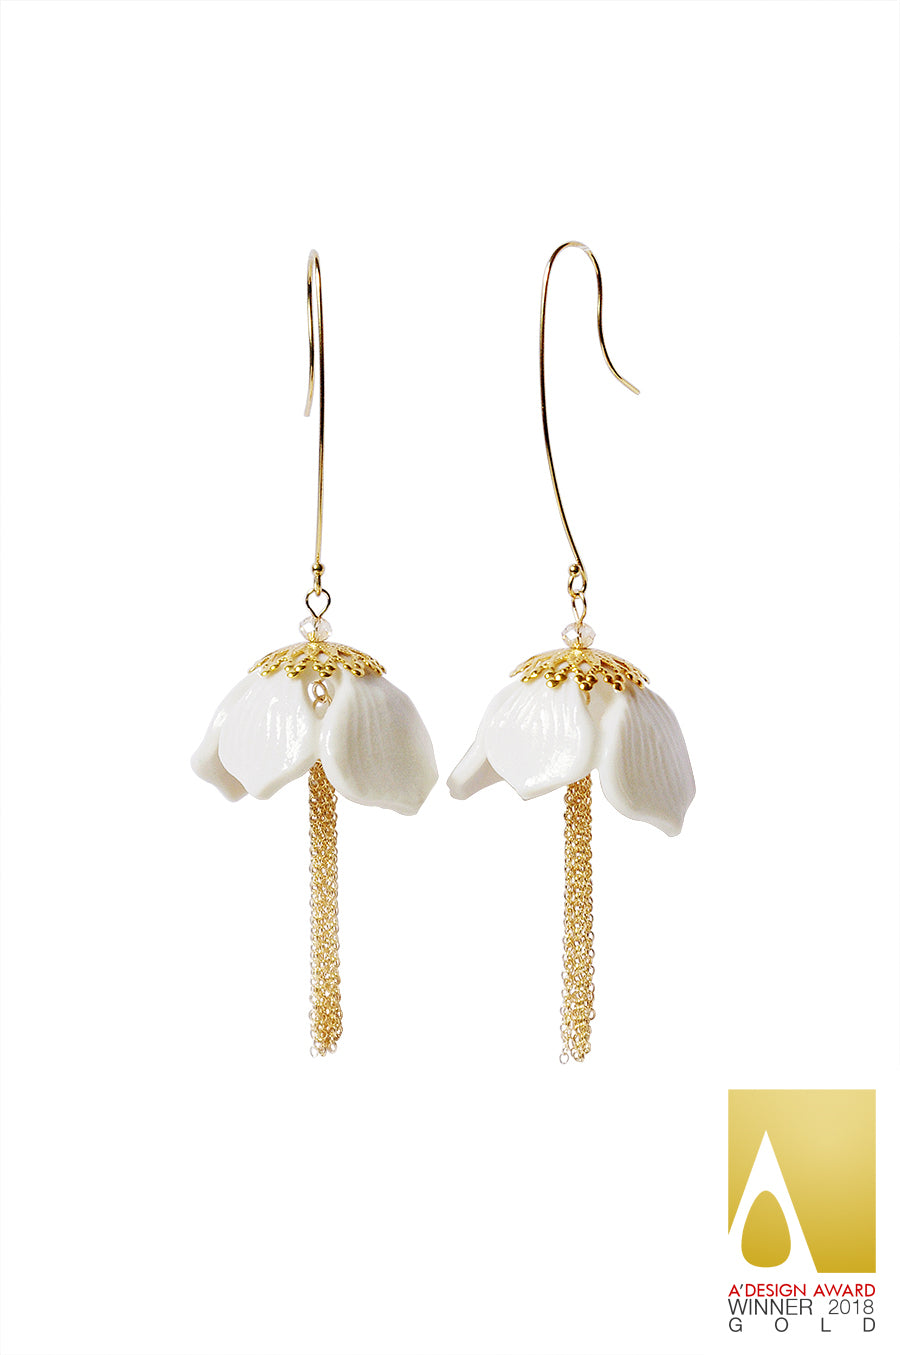 Porcelain Snowdrop Flower Tassel Earrings